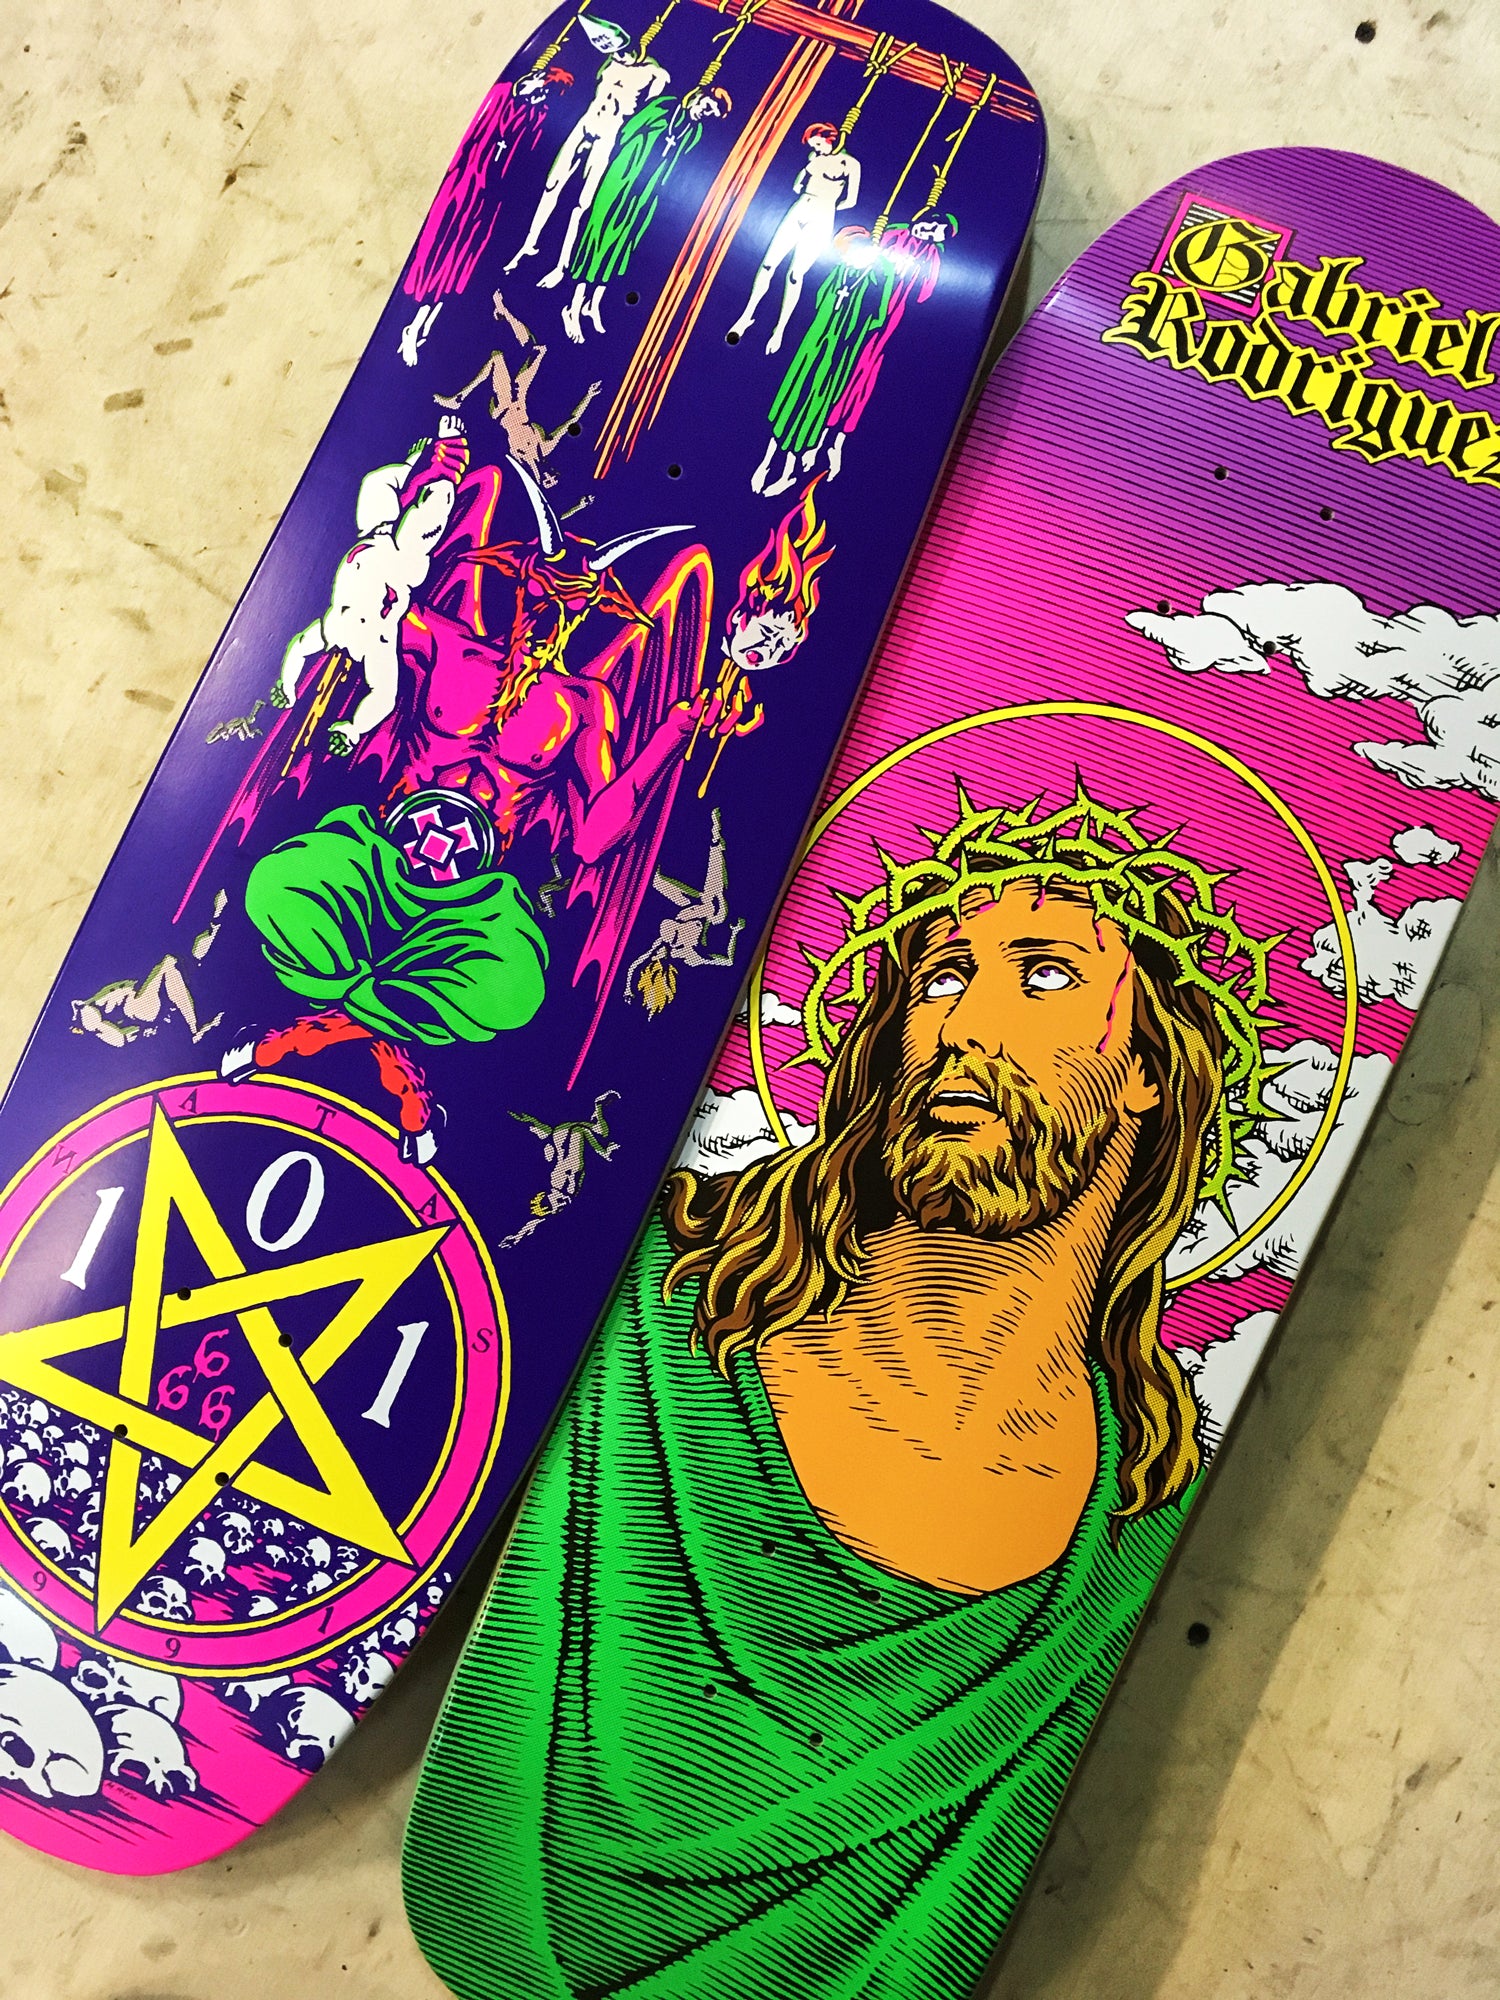 Neon 101 Natas Devil Gabriel Rodriguez Jesus Reissue skateboards limited edition